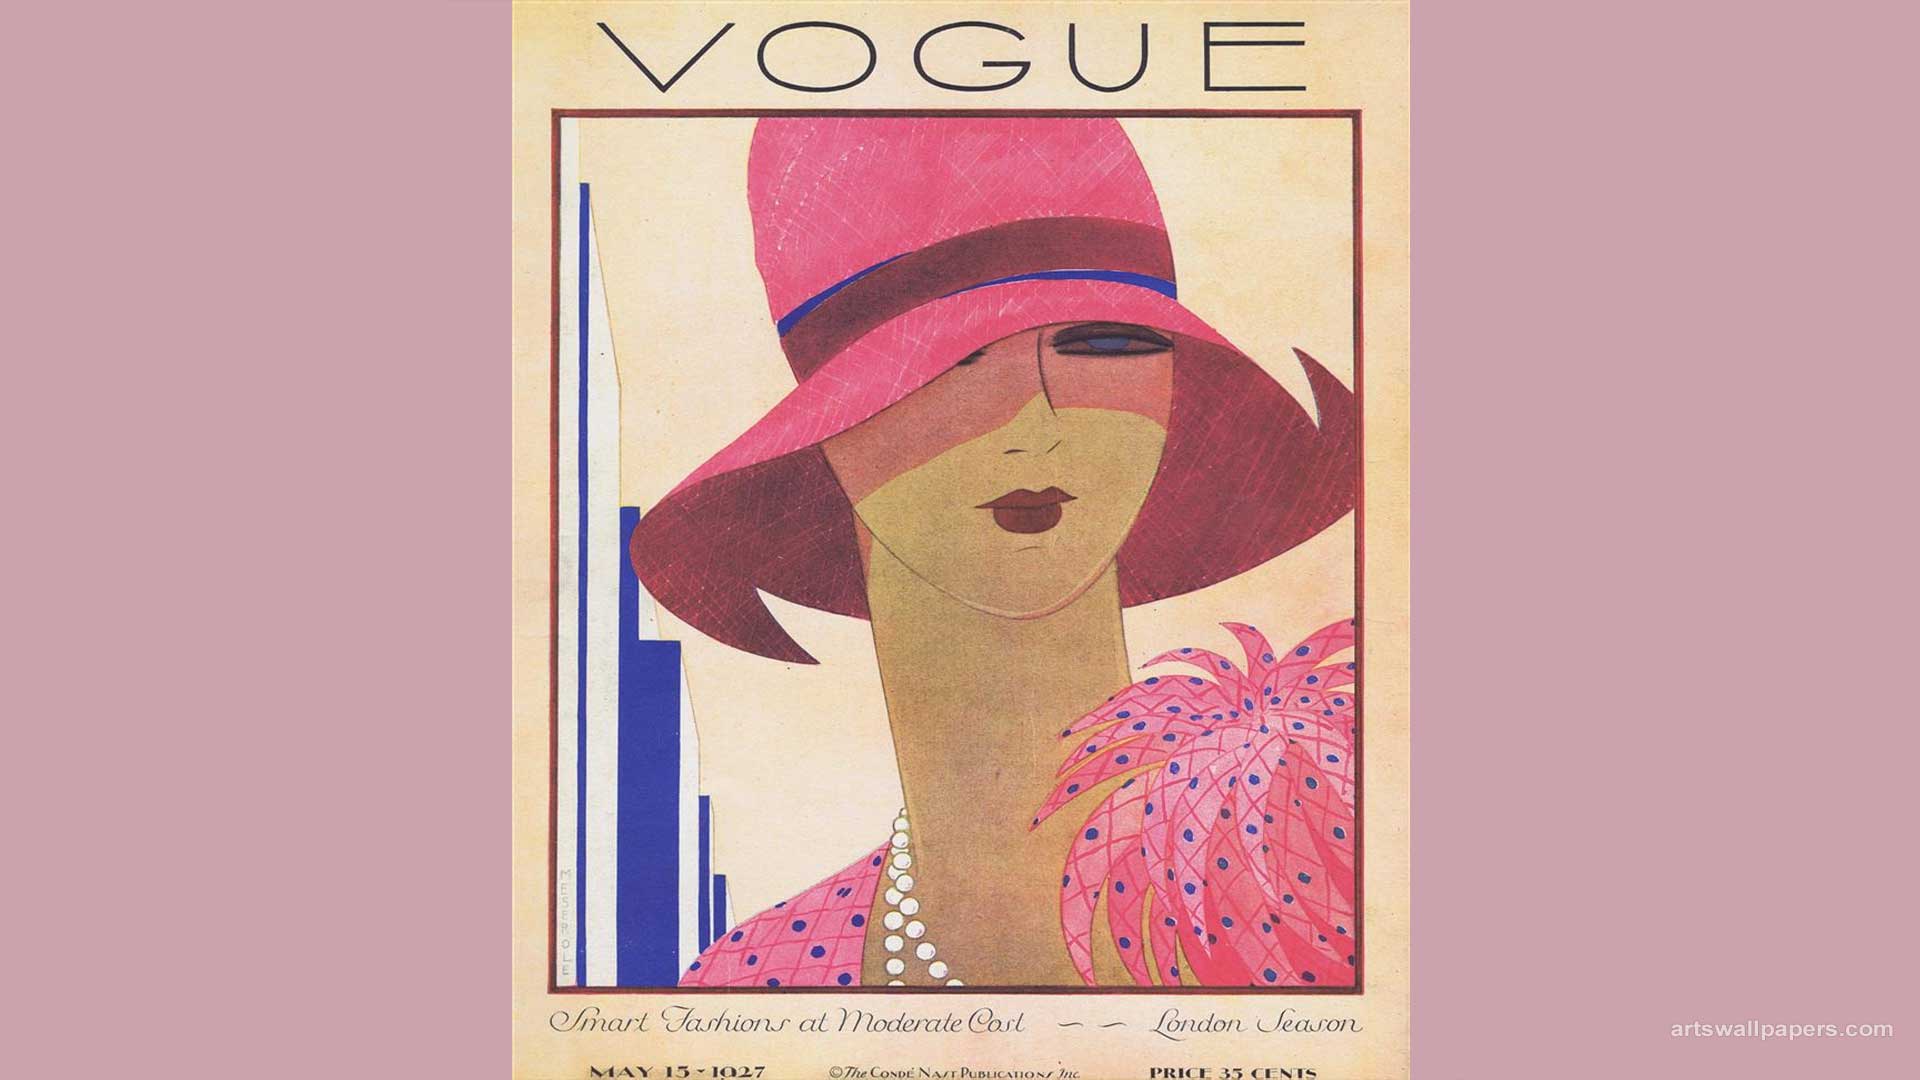 Amanda Seyfried Vogue Magazine Wallpapers